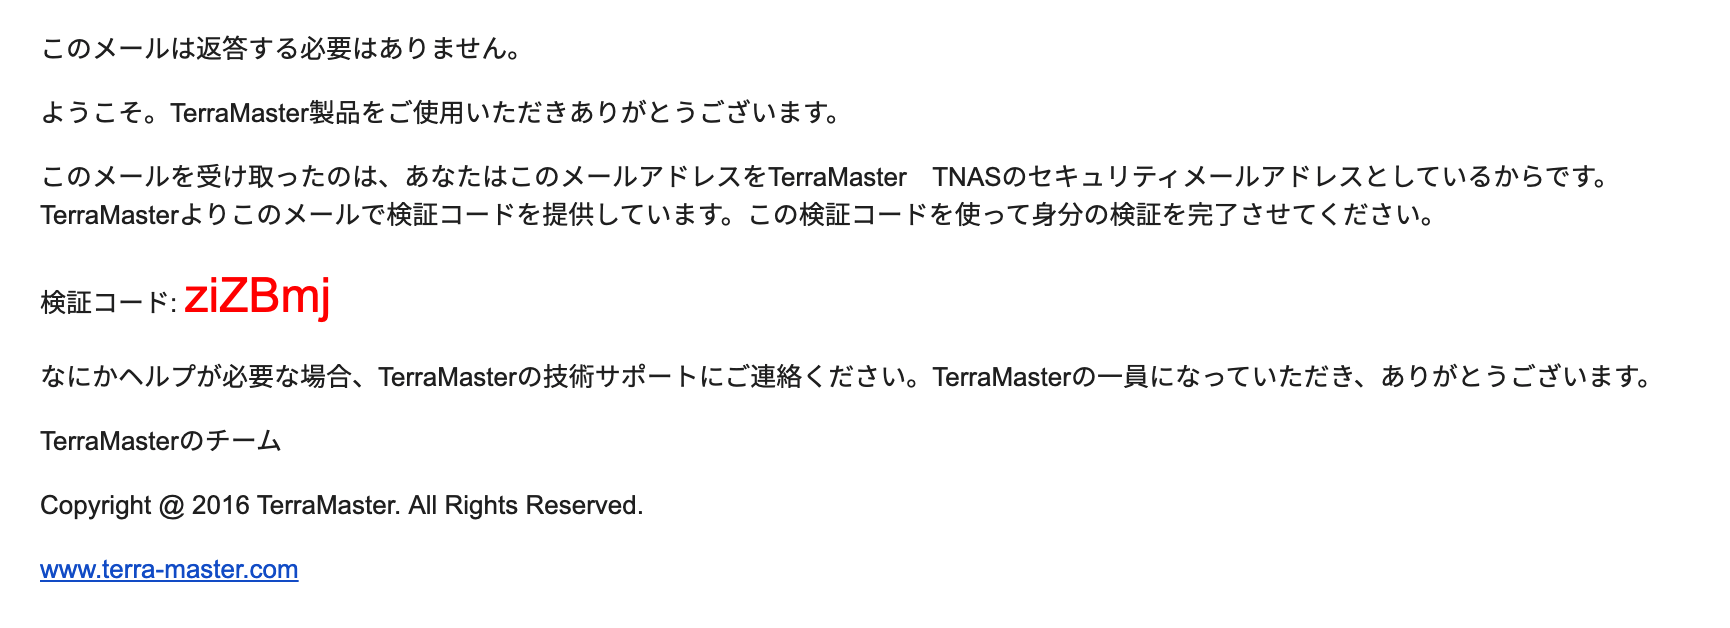 TerraMaster メール認証